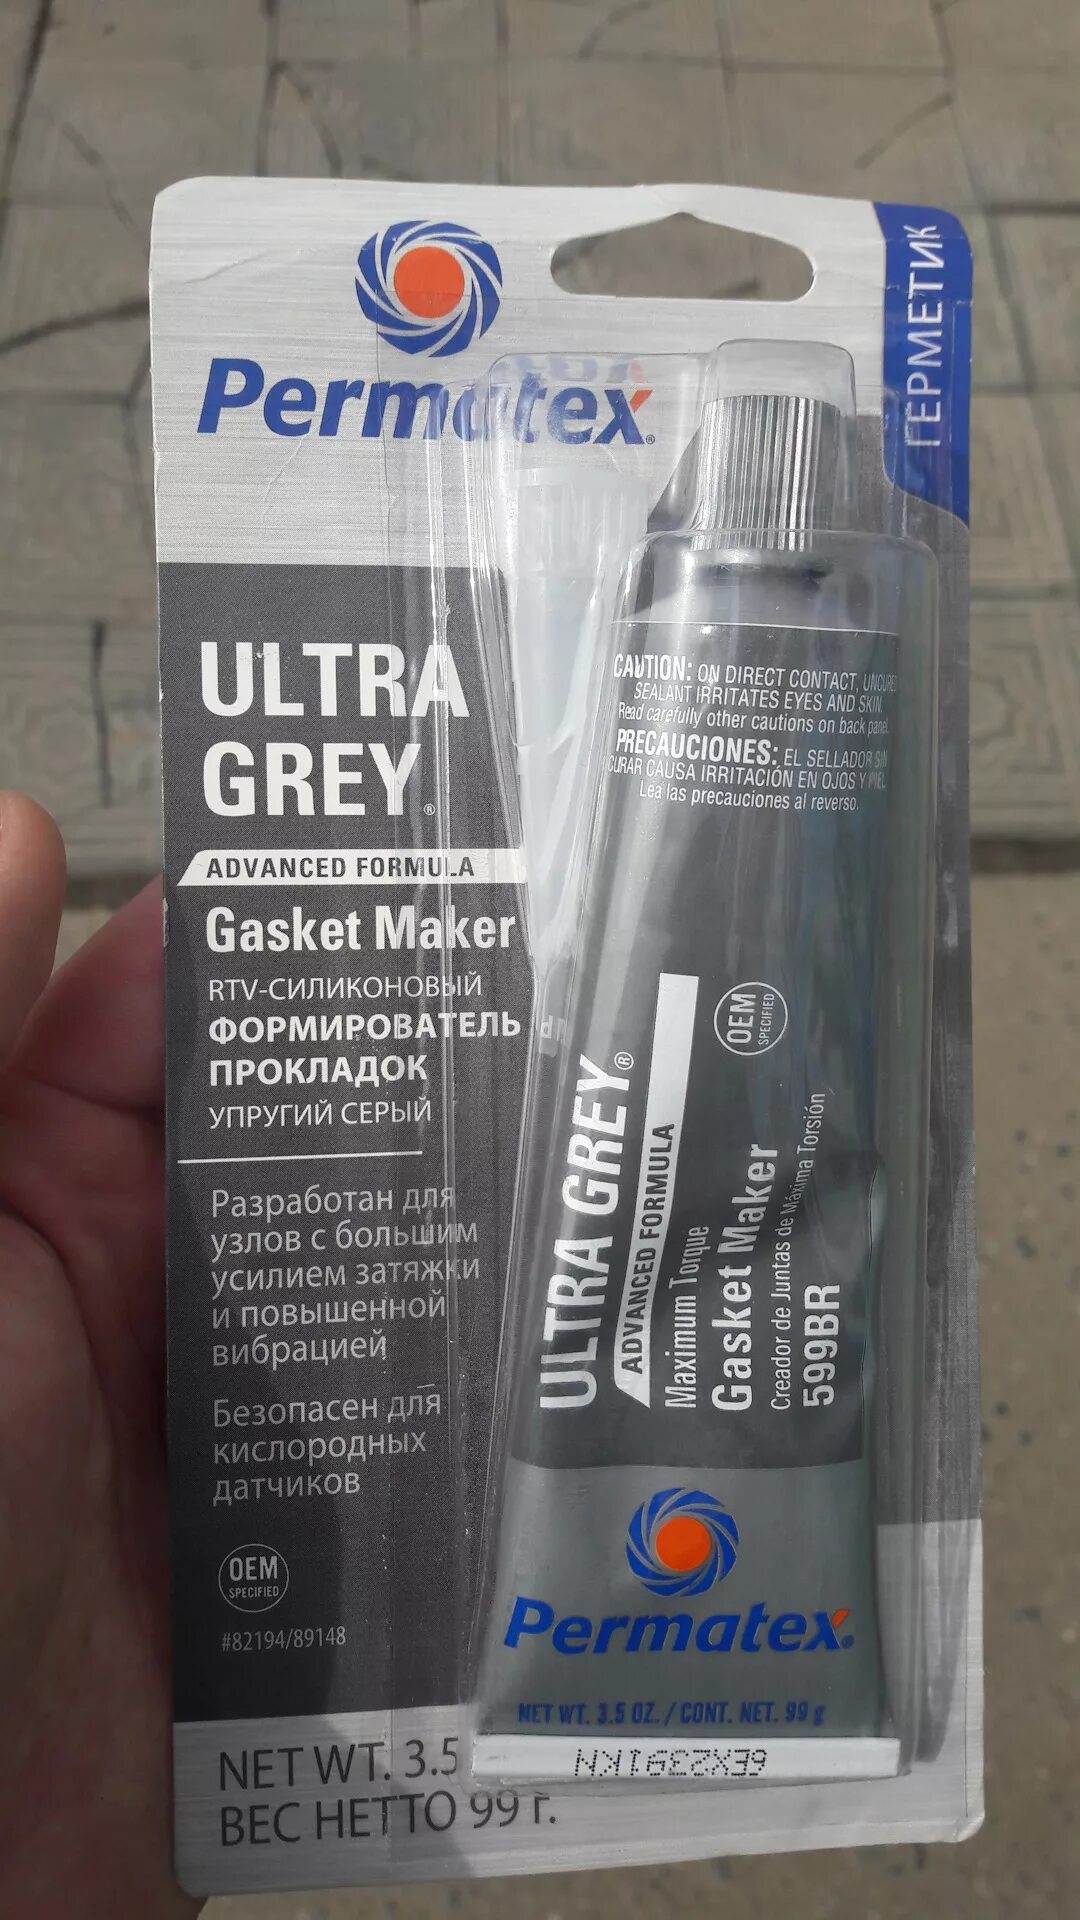 Герметик перматекс. Герметик Permatex Ultra Grey 599 br. Герметик-формирователь прокладок Permatex ультра грей 82194. Герметик серый (99г) Permatex 87148. Permatex pr89148.